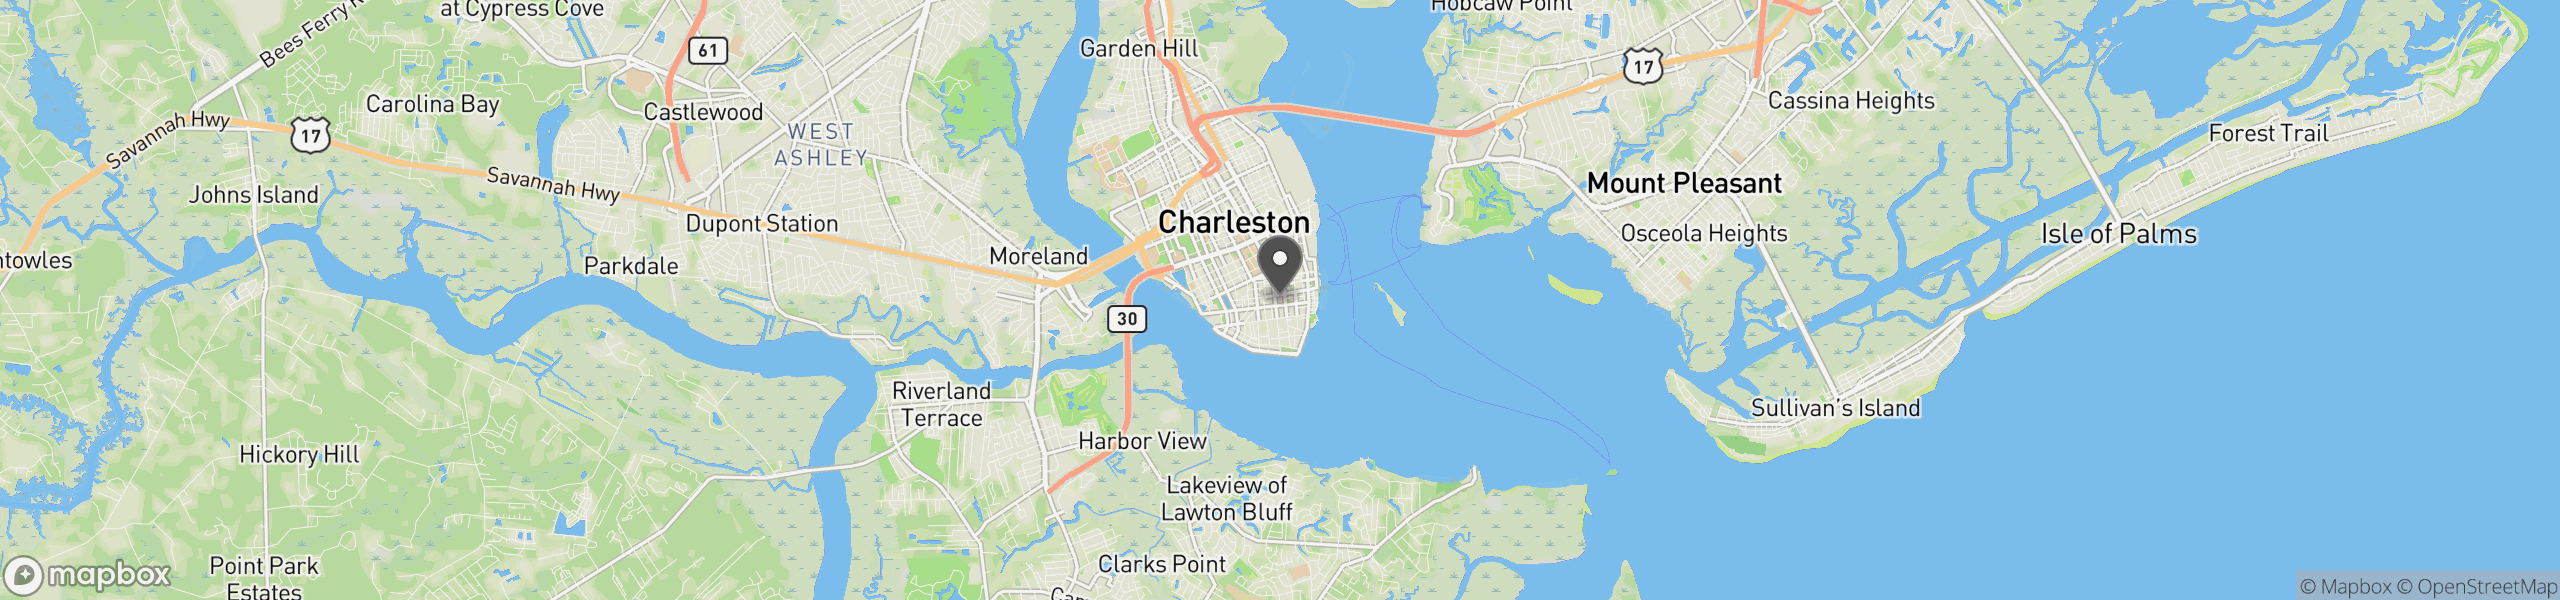 Charleston, SC 29401